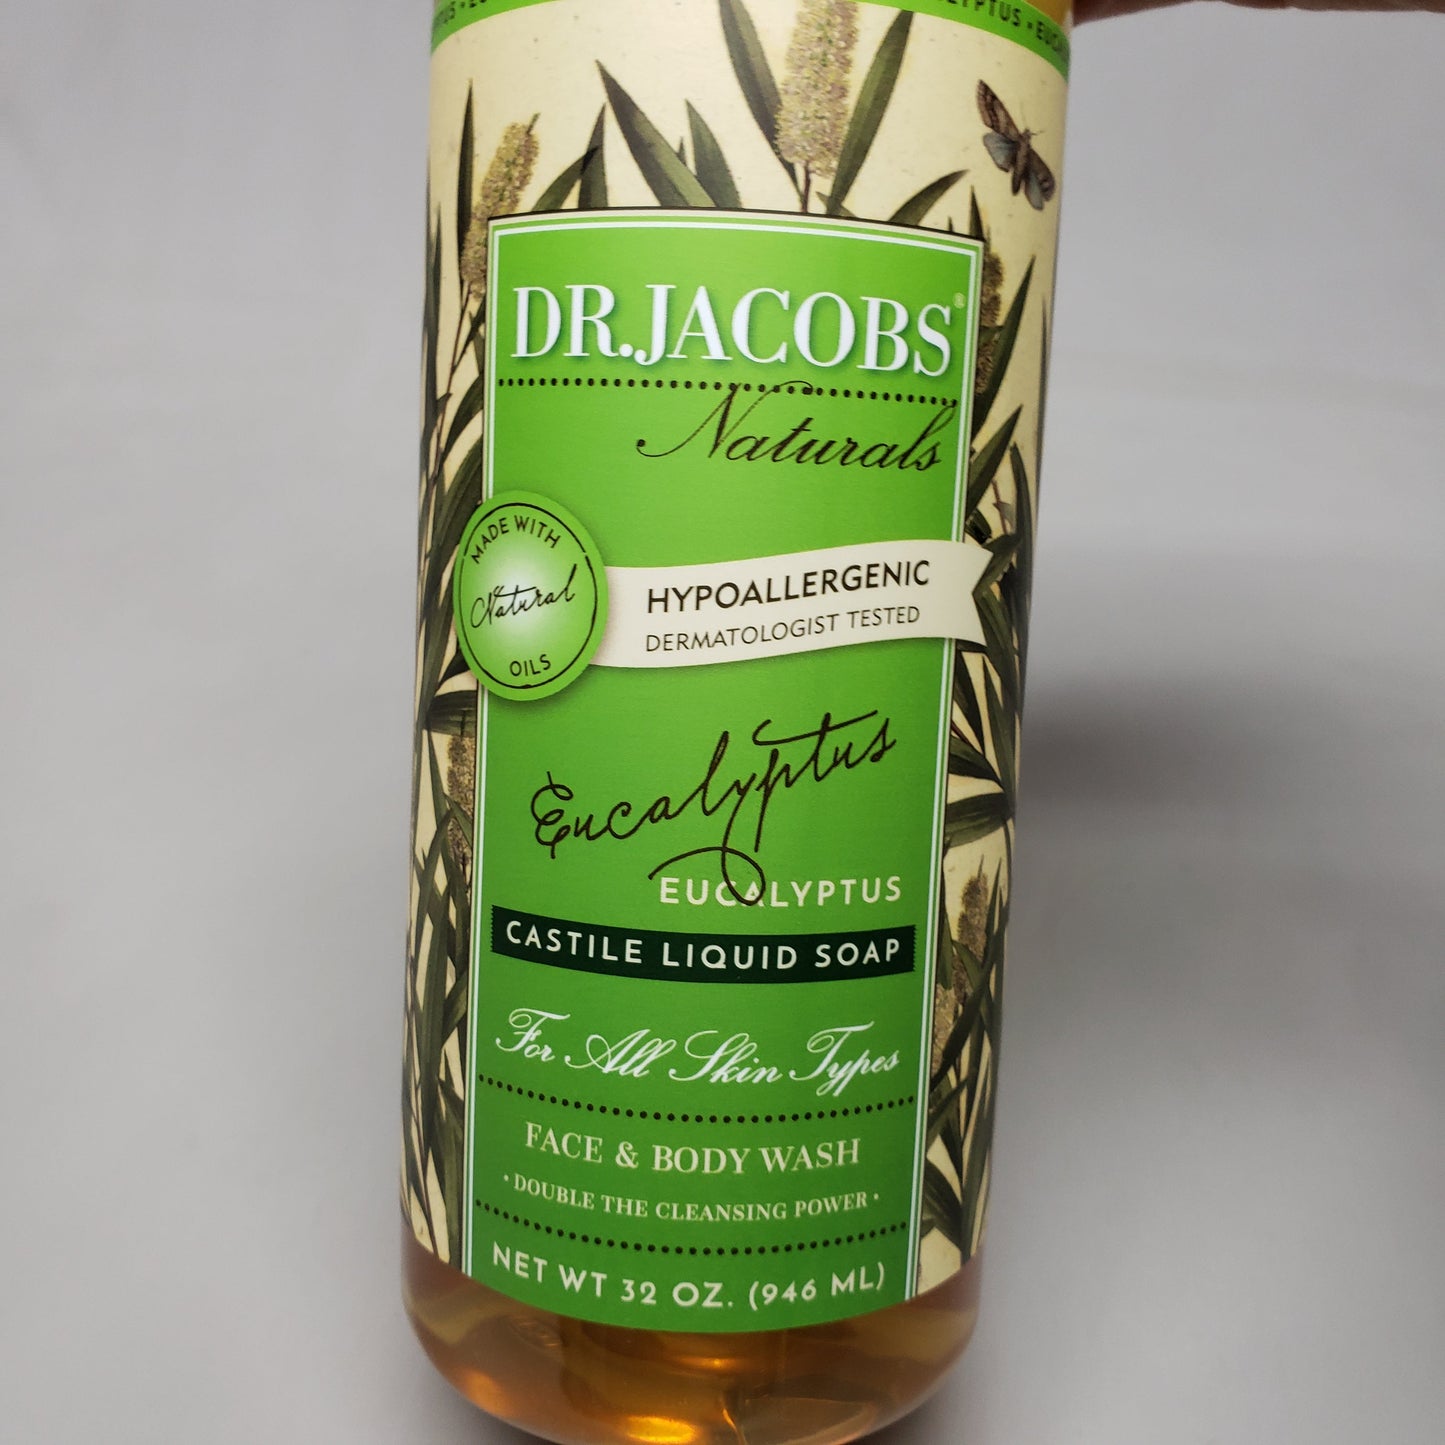 DR. JACOBS NATURALS Eucalyptus Castile Liquid Soap Lot of 4 - 32 oz Hypoallergenic (New)